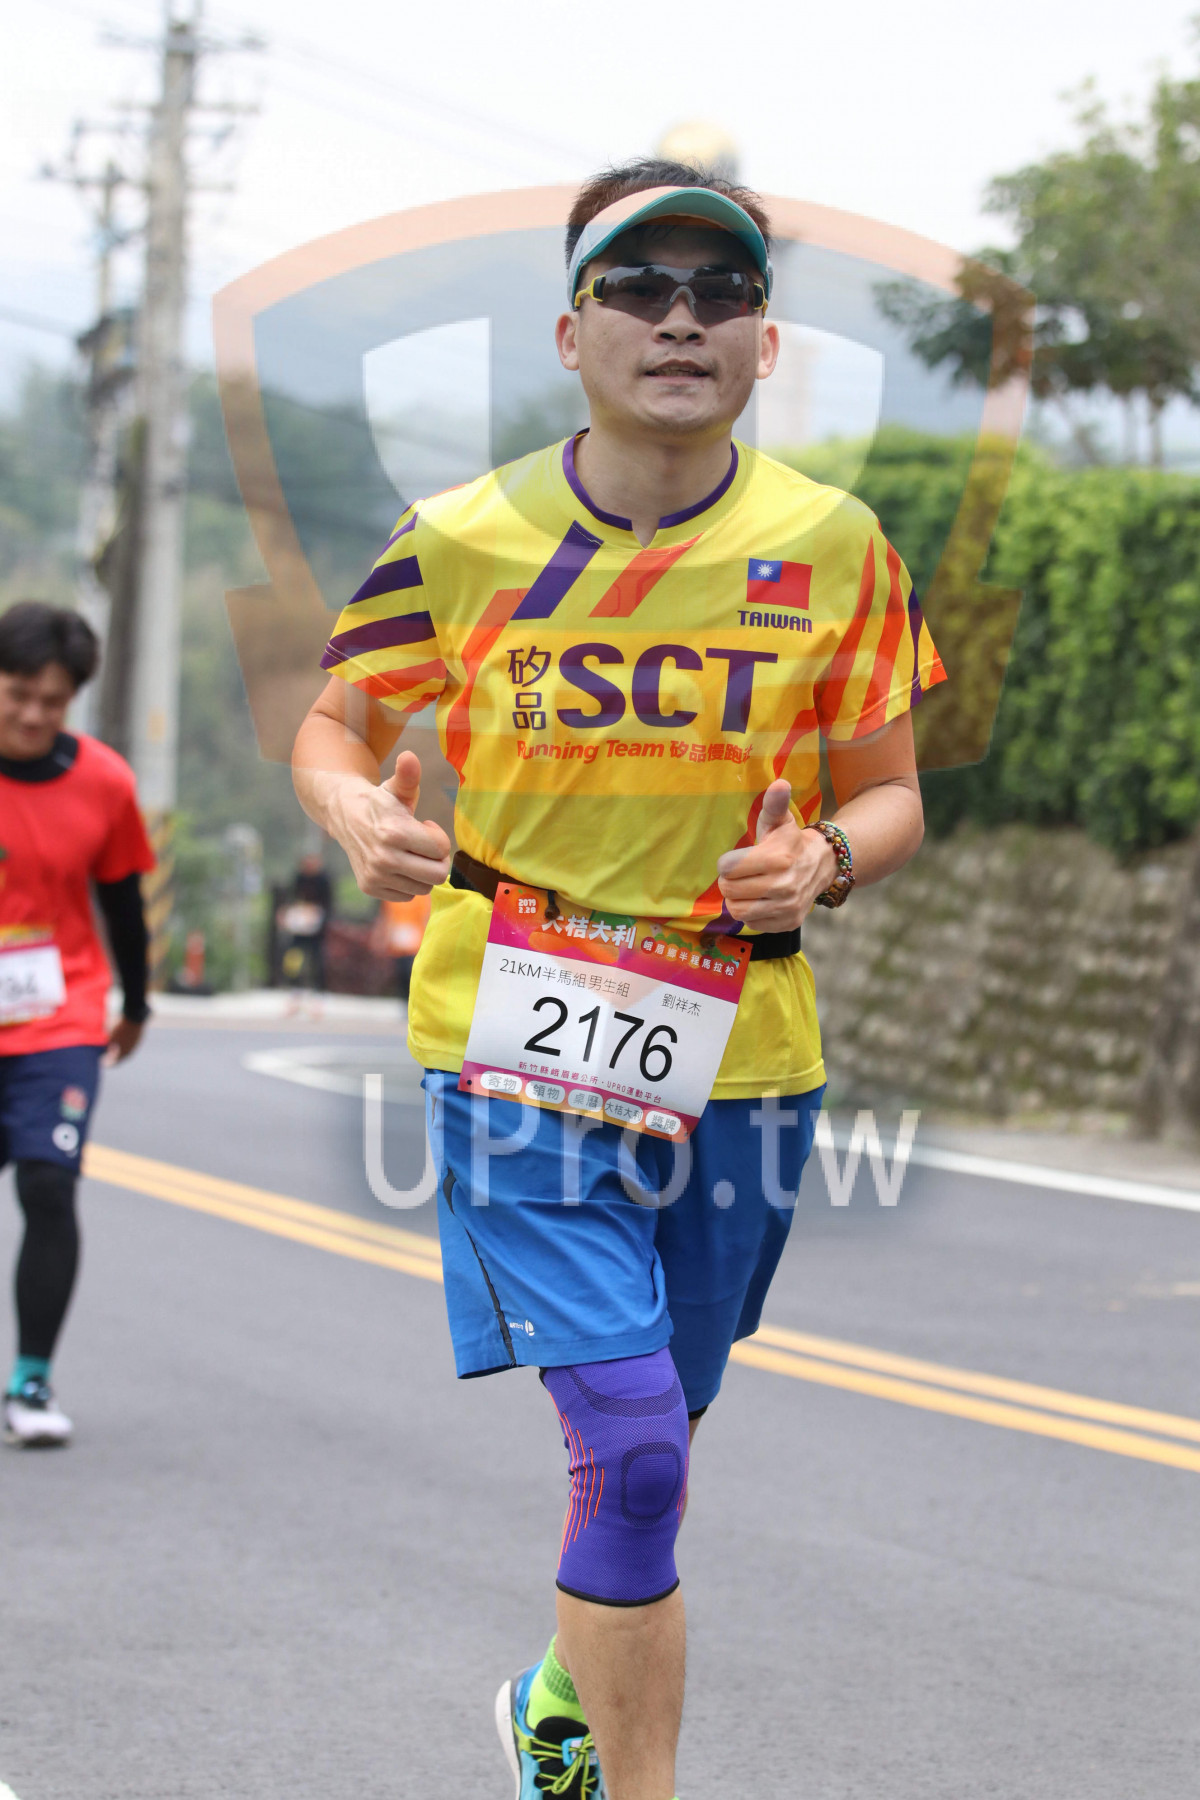 TAIWAN,SCT,Running Team,2176|